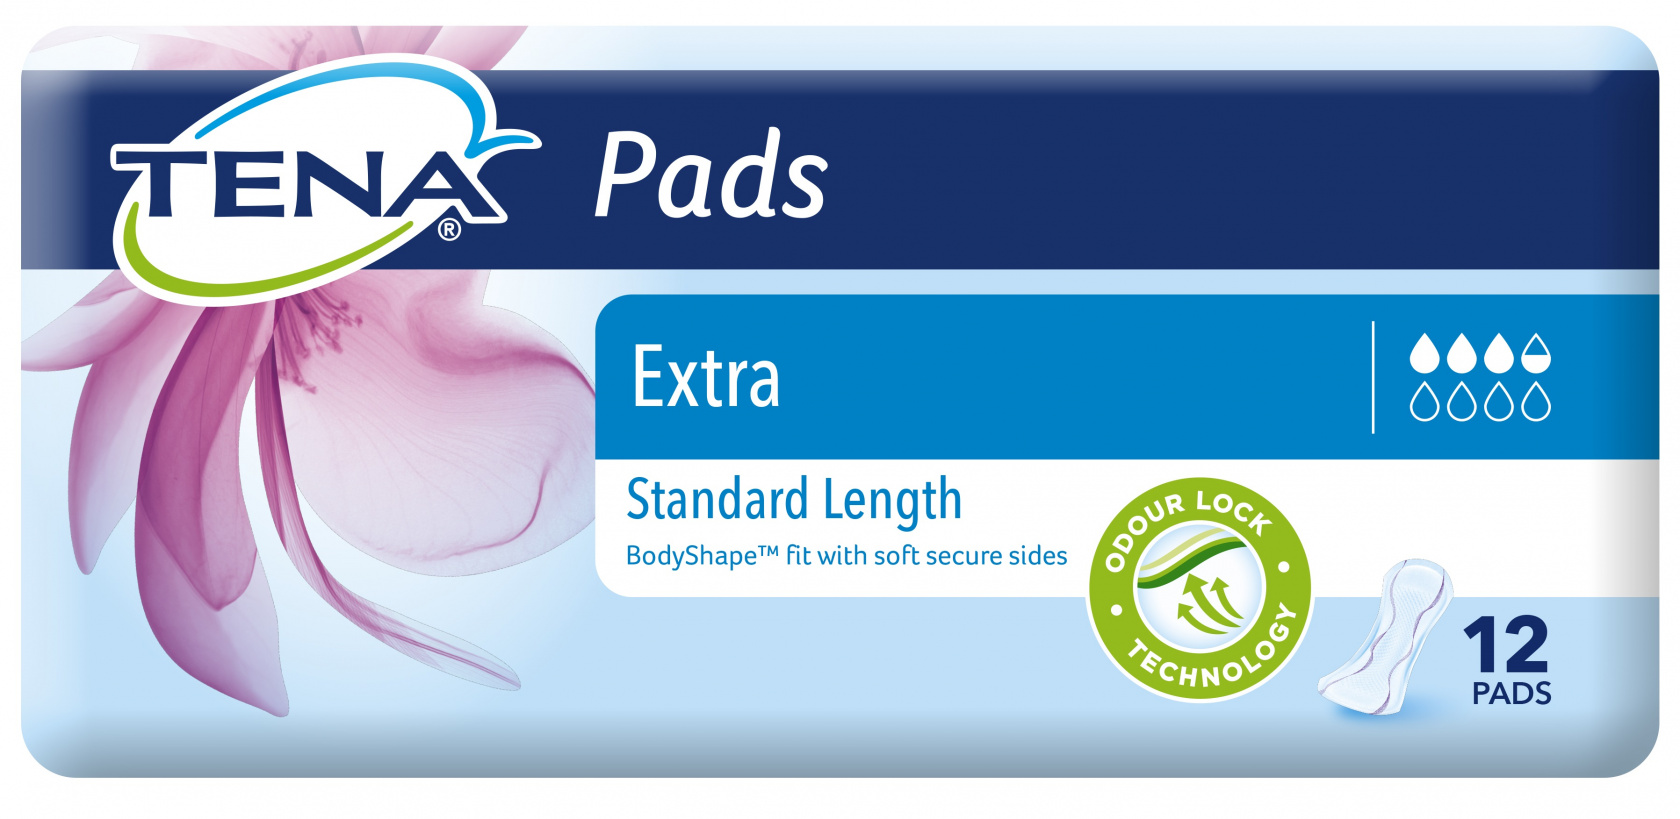 TENA Pads Extra Standard Length 12s image 0